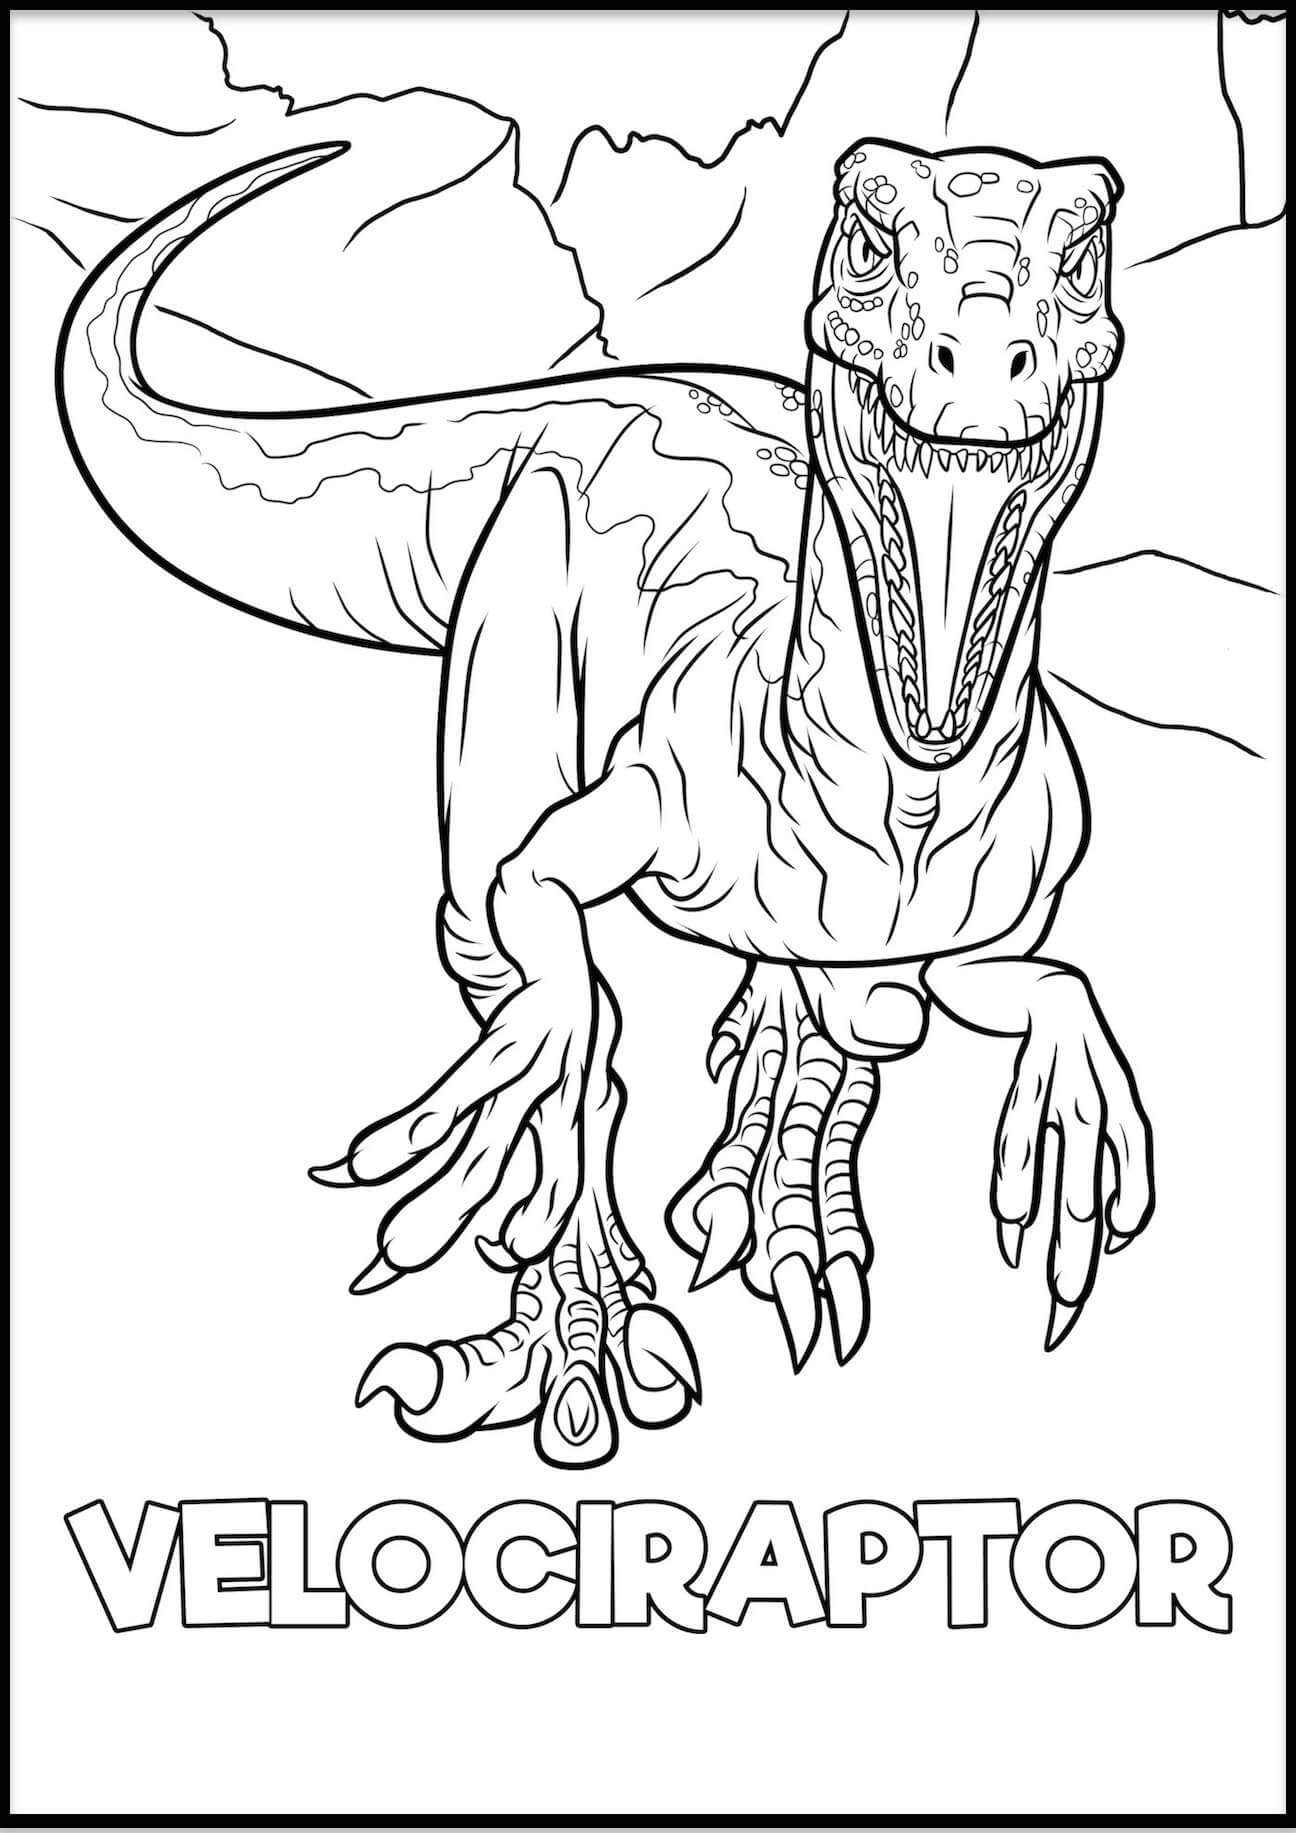 Vélociraptor coloring page